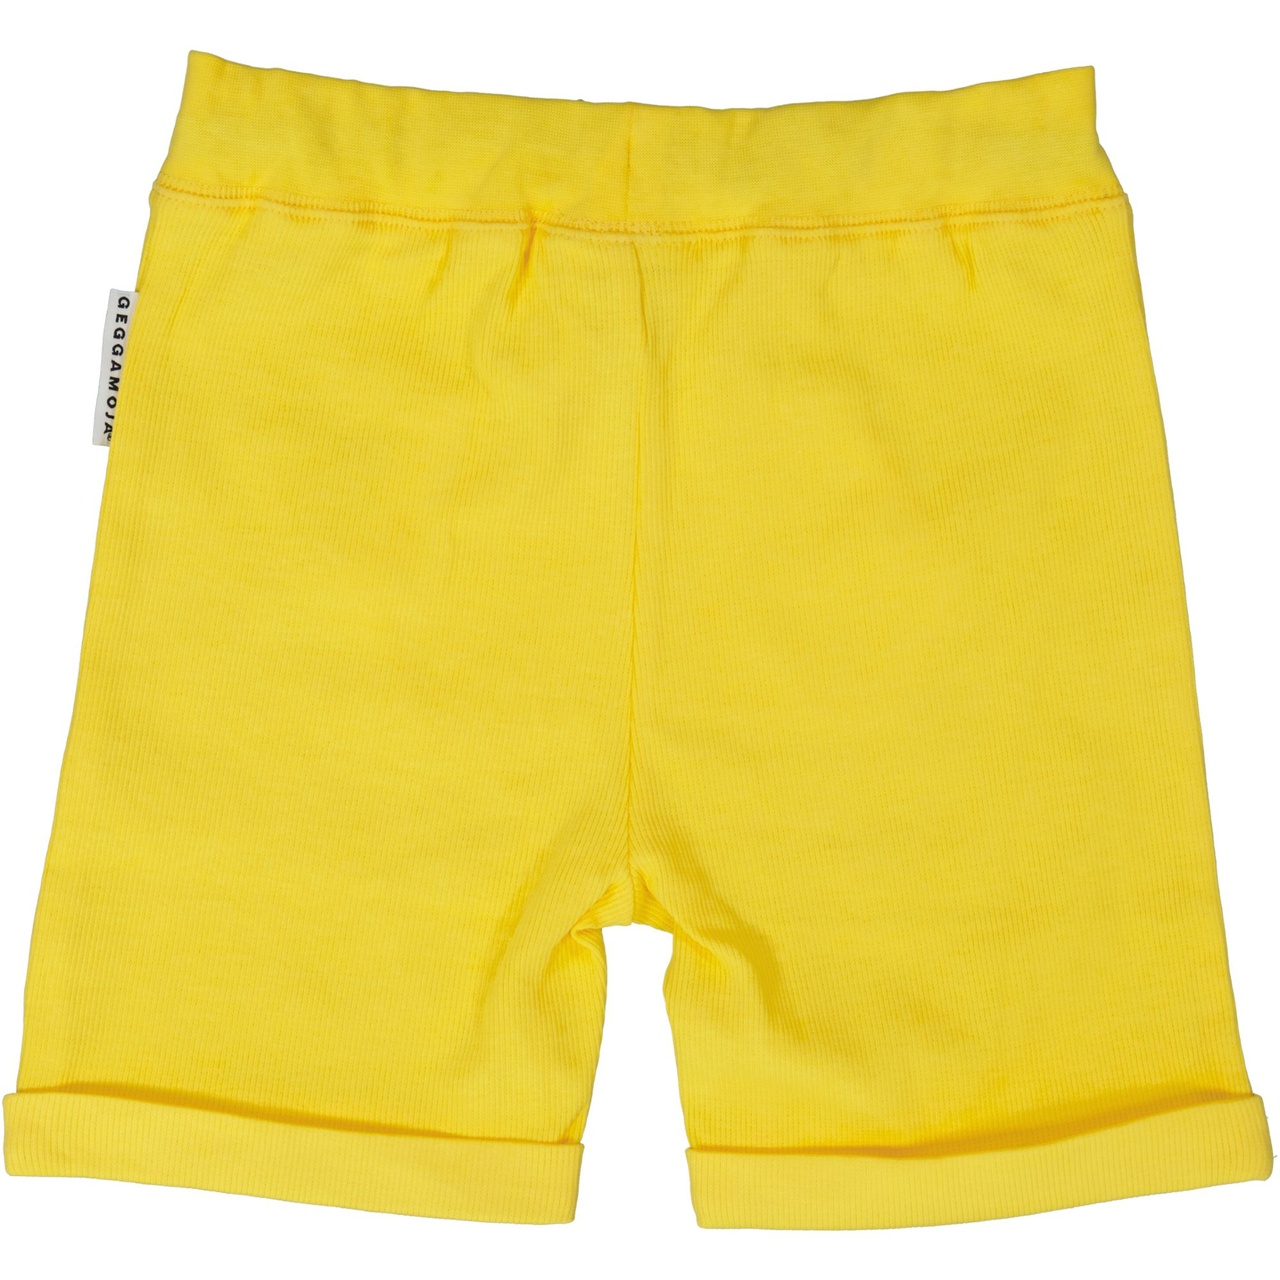 Shorts Yellow 04